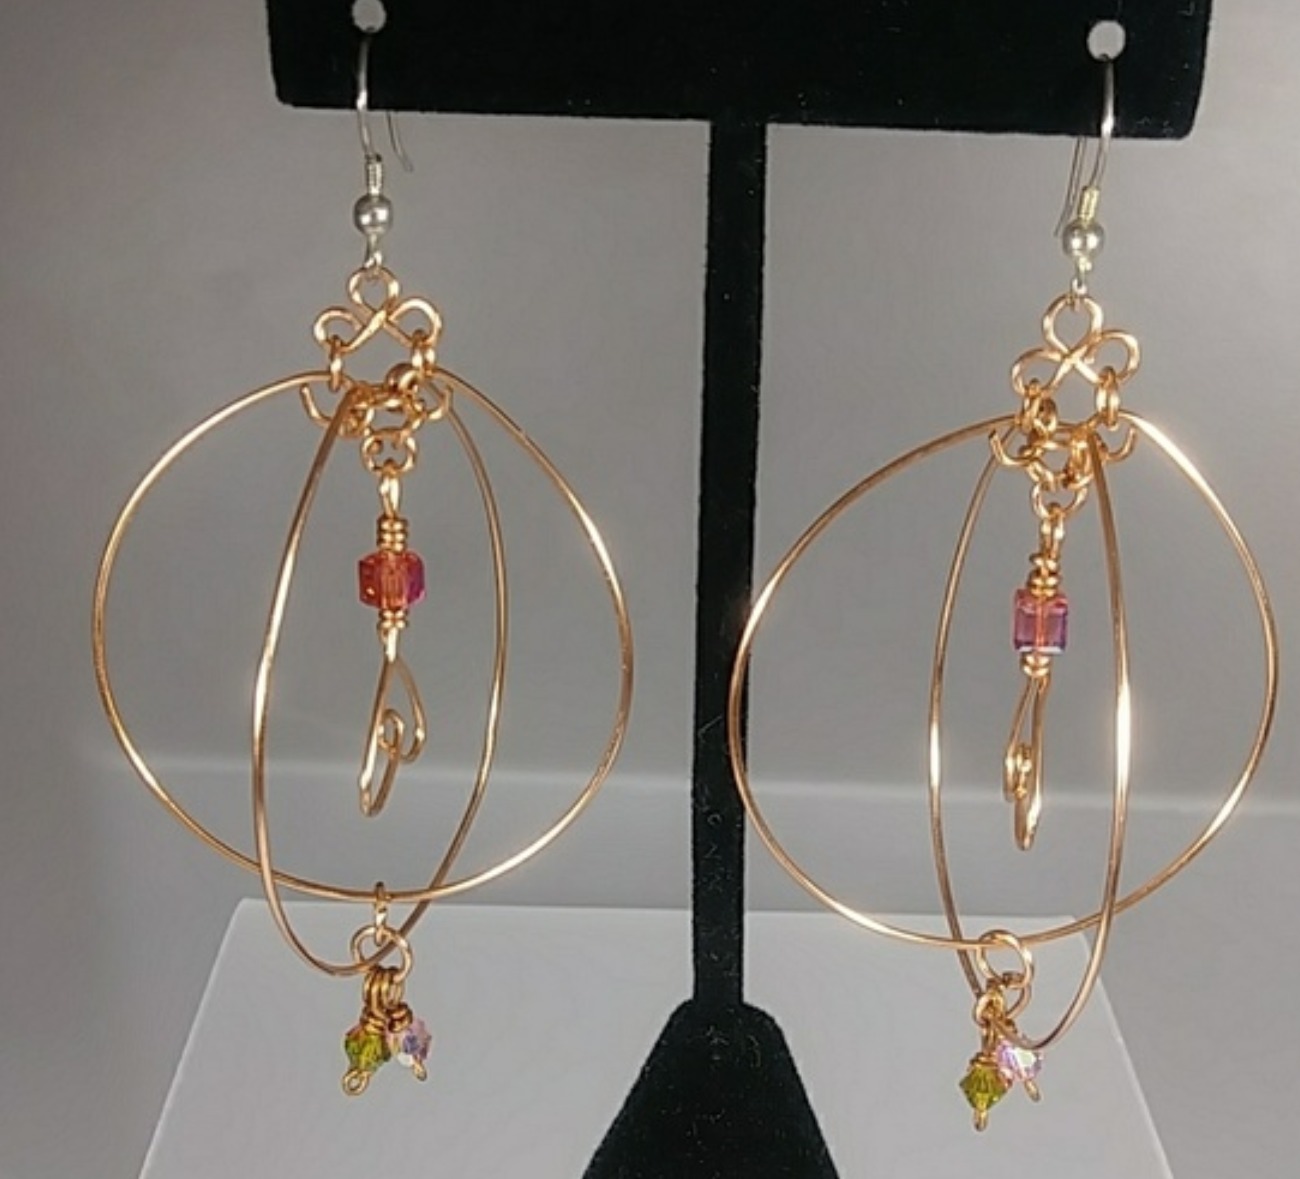 601 - EAR - Description: Earrings: Copper Wire, Swarovski Crystal Beads, 3 1/2” (inches/Length) 2 ” (inches/Width) Sterling Silver Fishhook Earwire